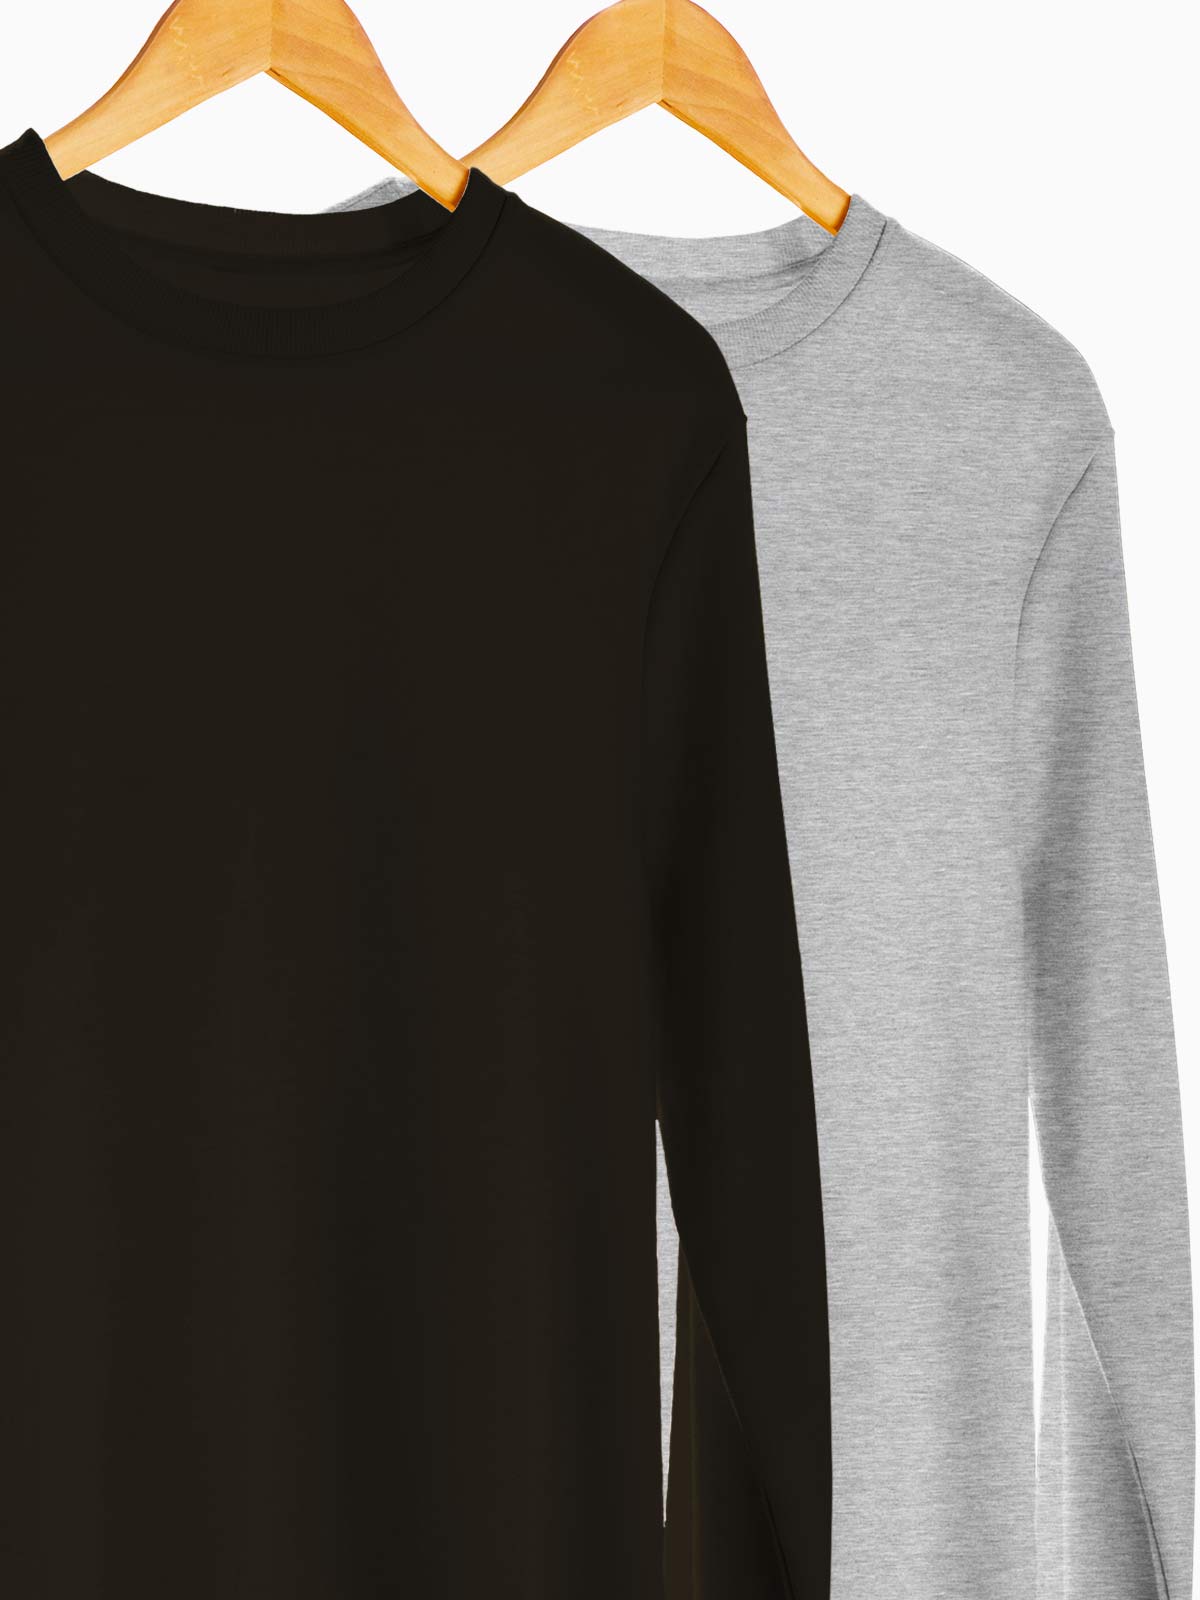 Coffee Brown & Light Grey Unisex Plain Sweatshirt Combo